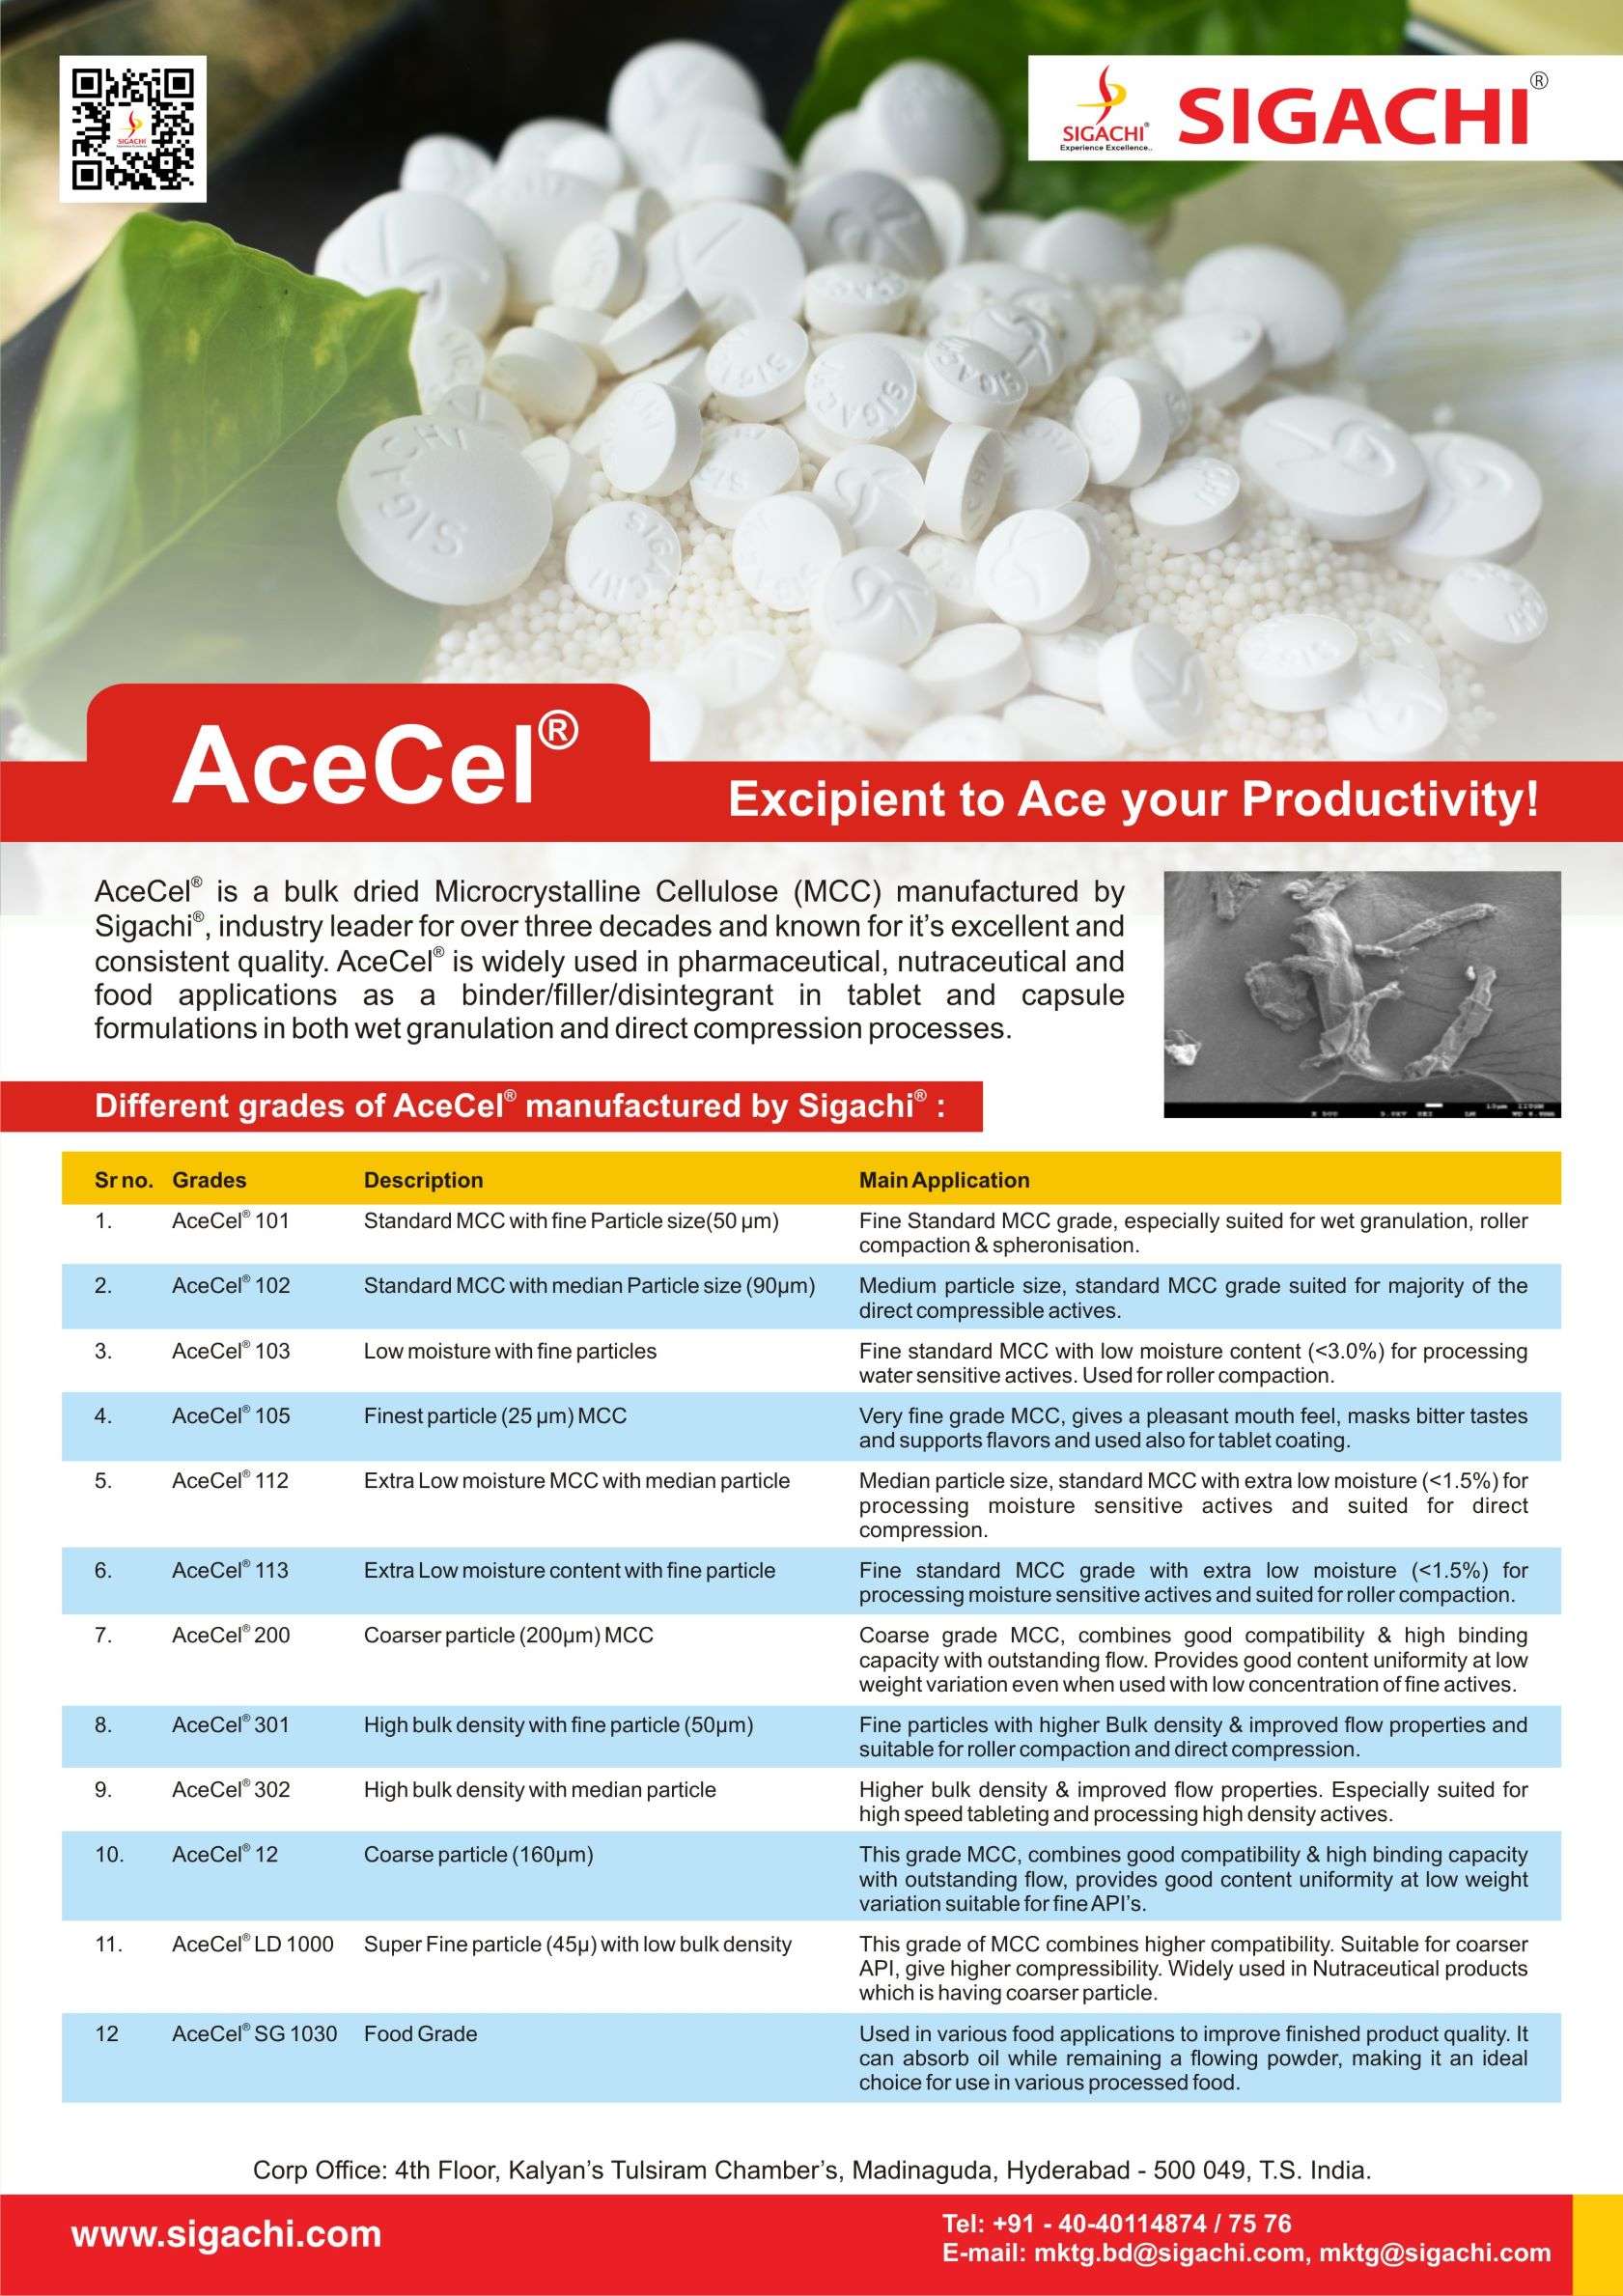 AceCel® 101